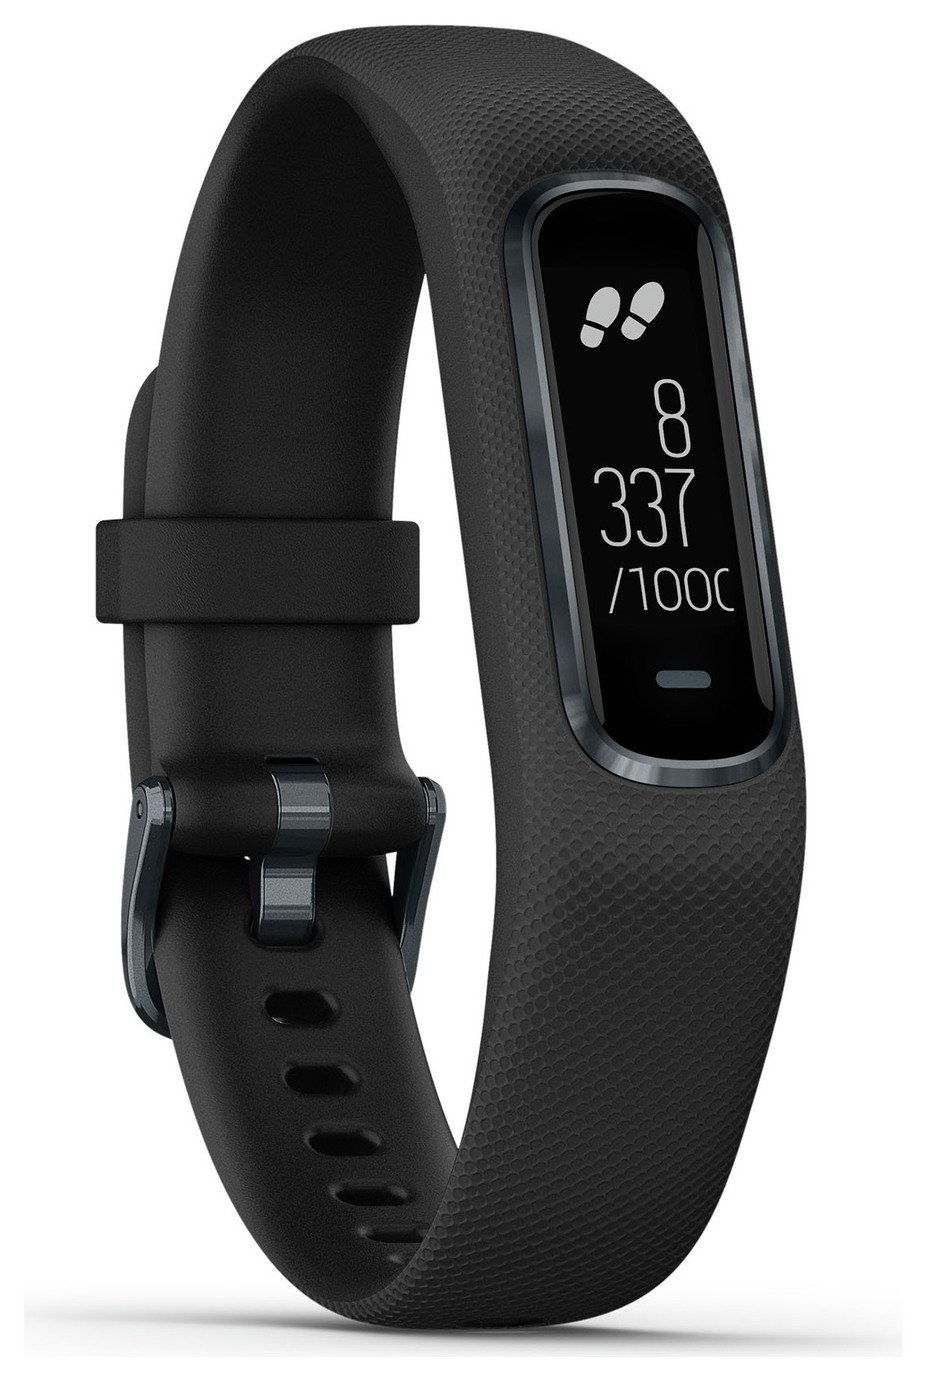 Garmin Vivosmart 4 Large Smart Watch - Black